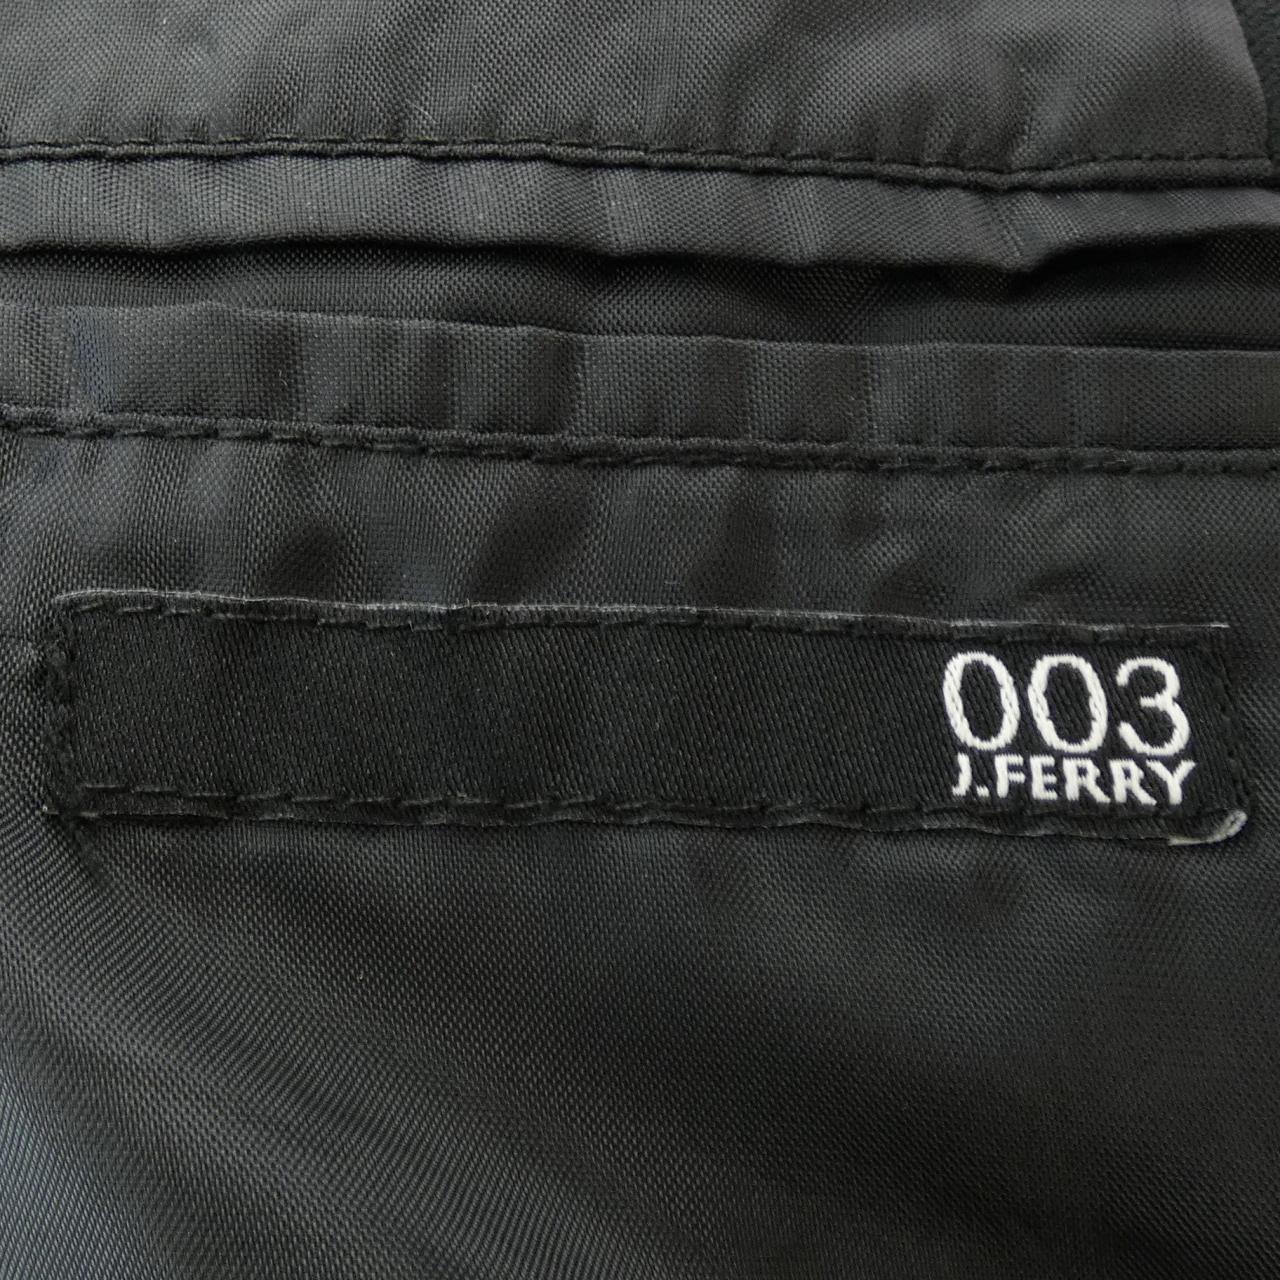 J.FERRY スーツ